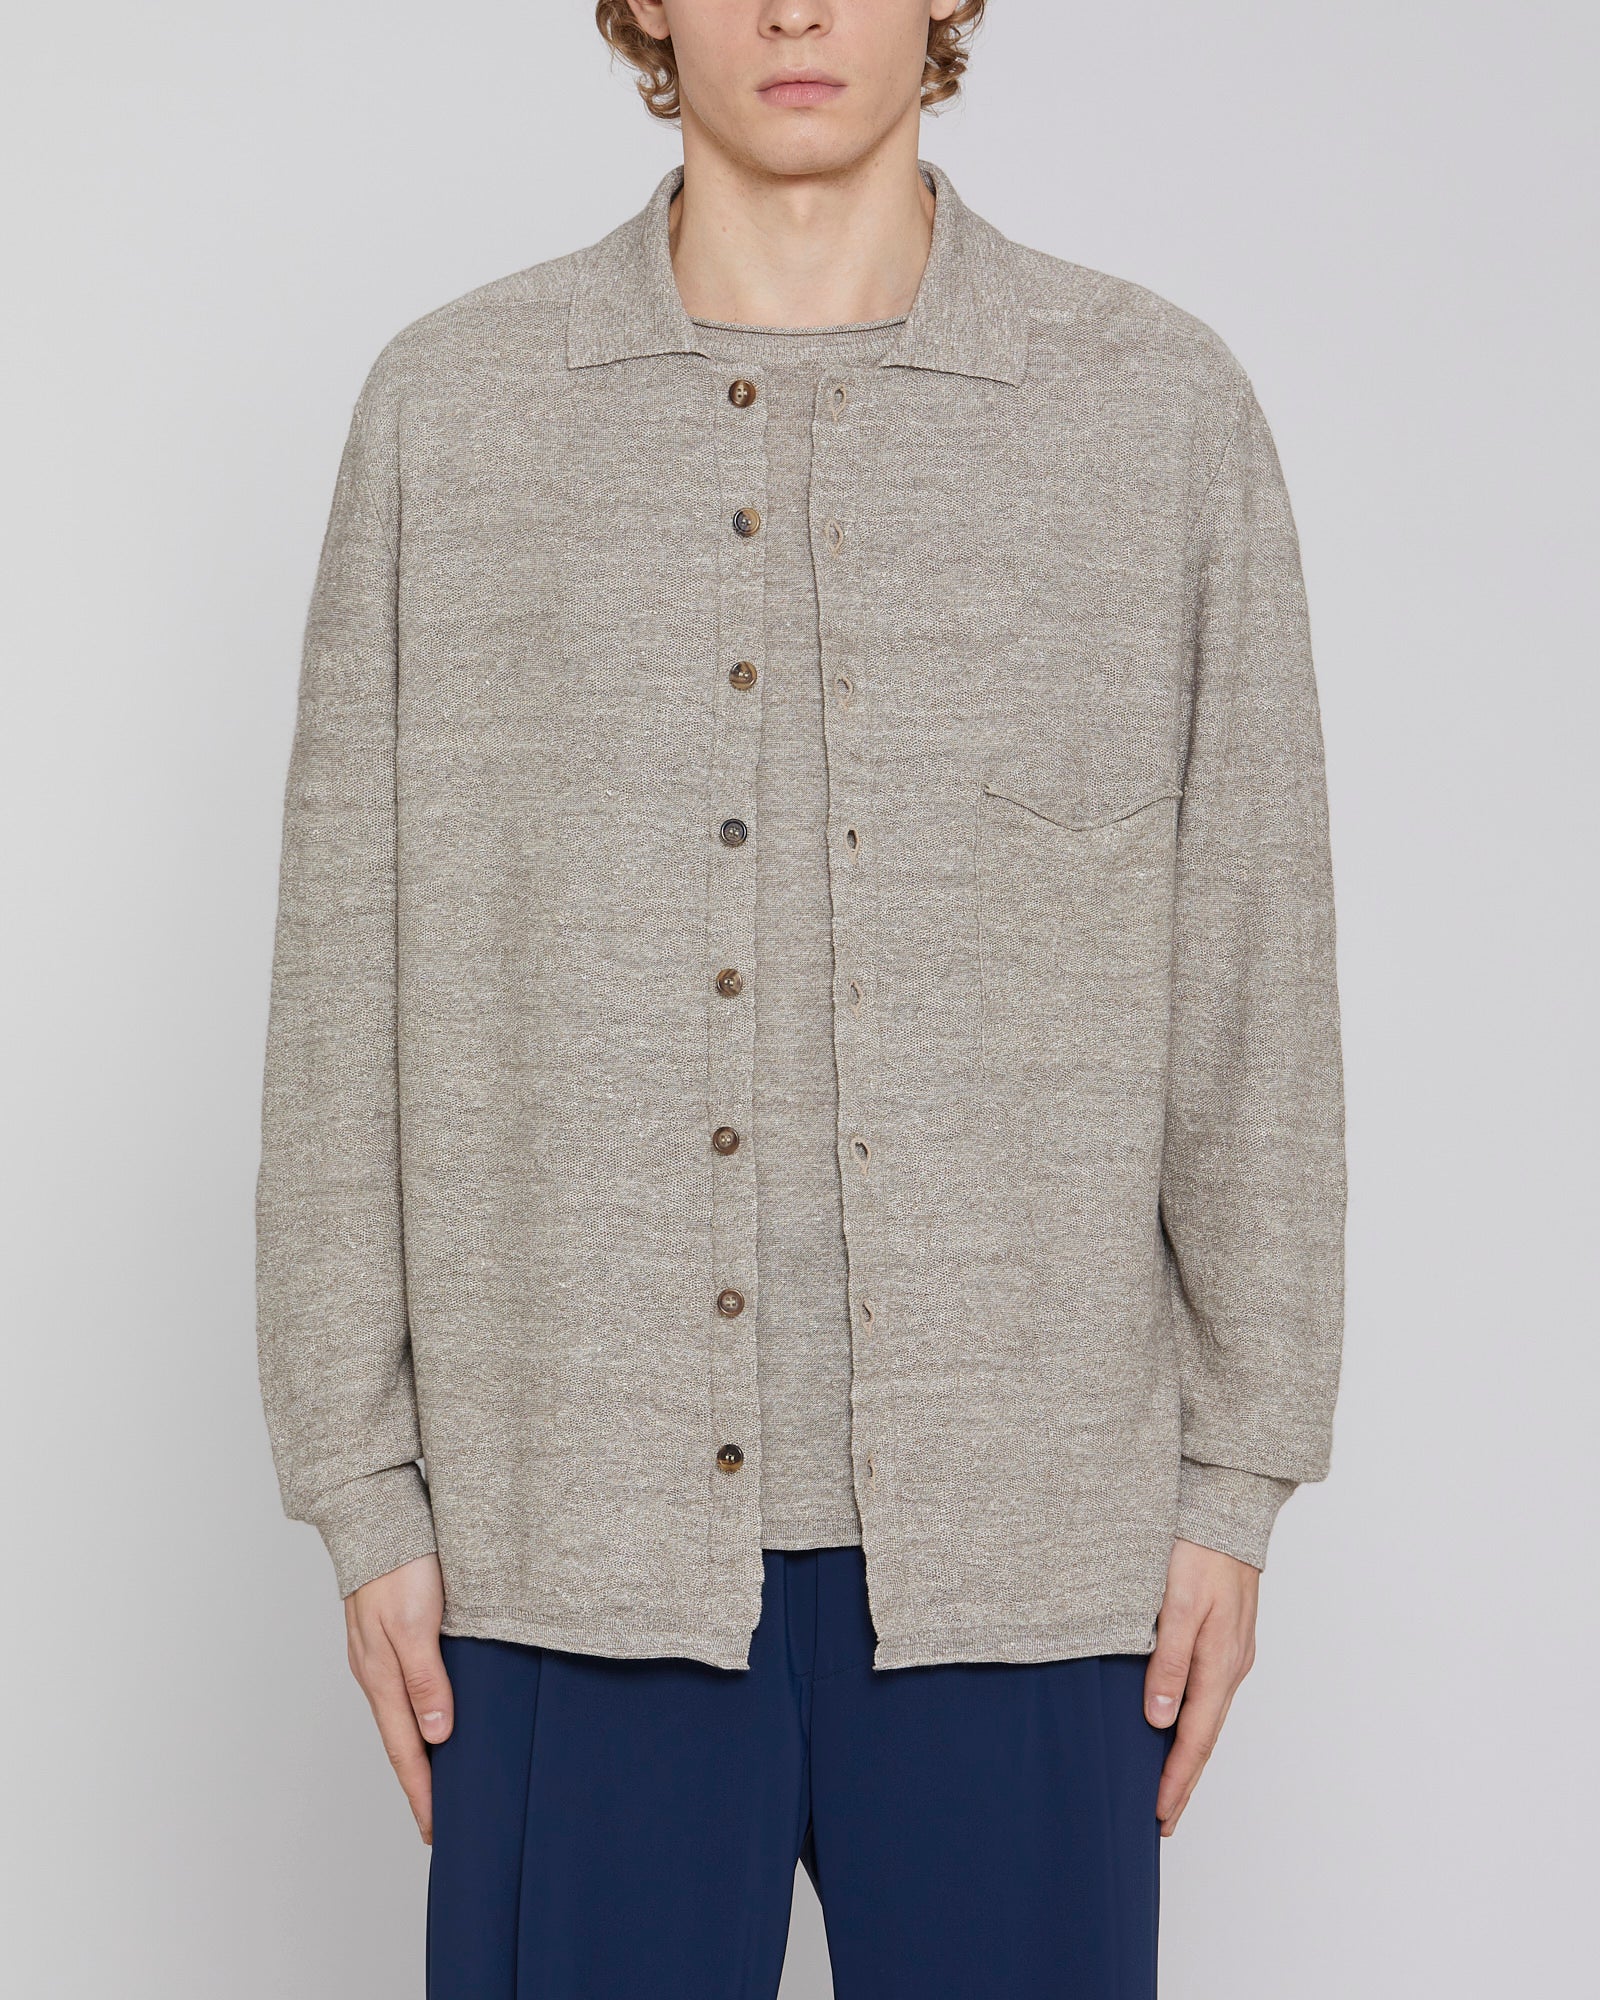 Long-sleeved drop-shoulder sweater